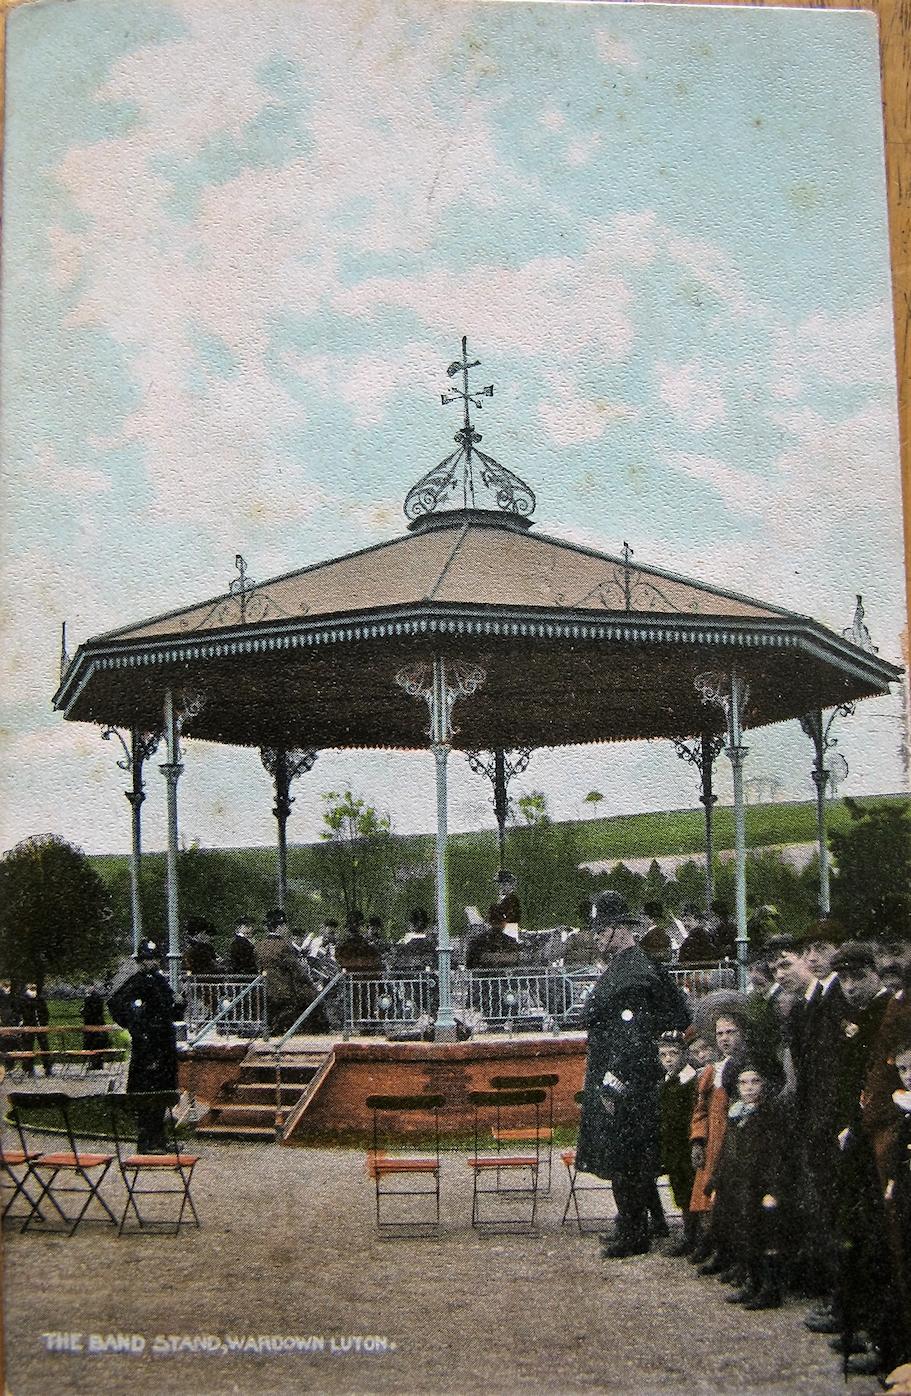 image of Bandstand at Wardown Park Luton